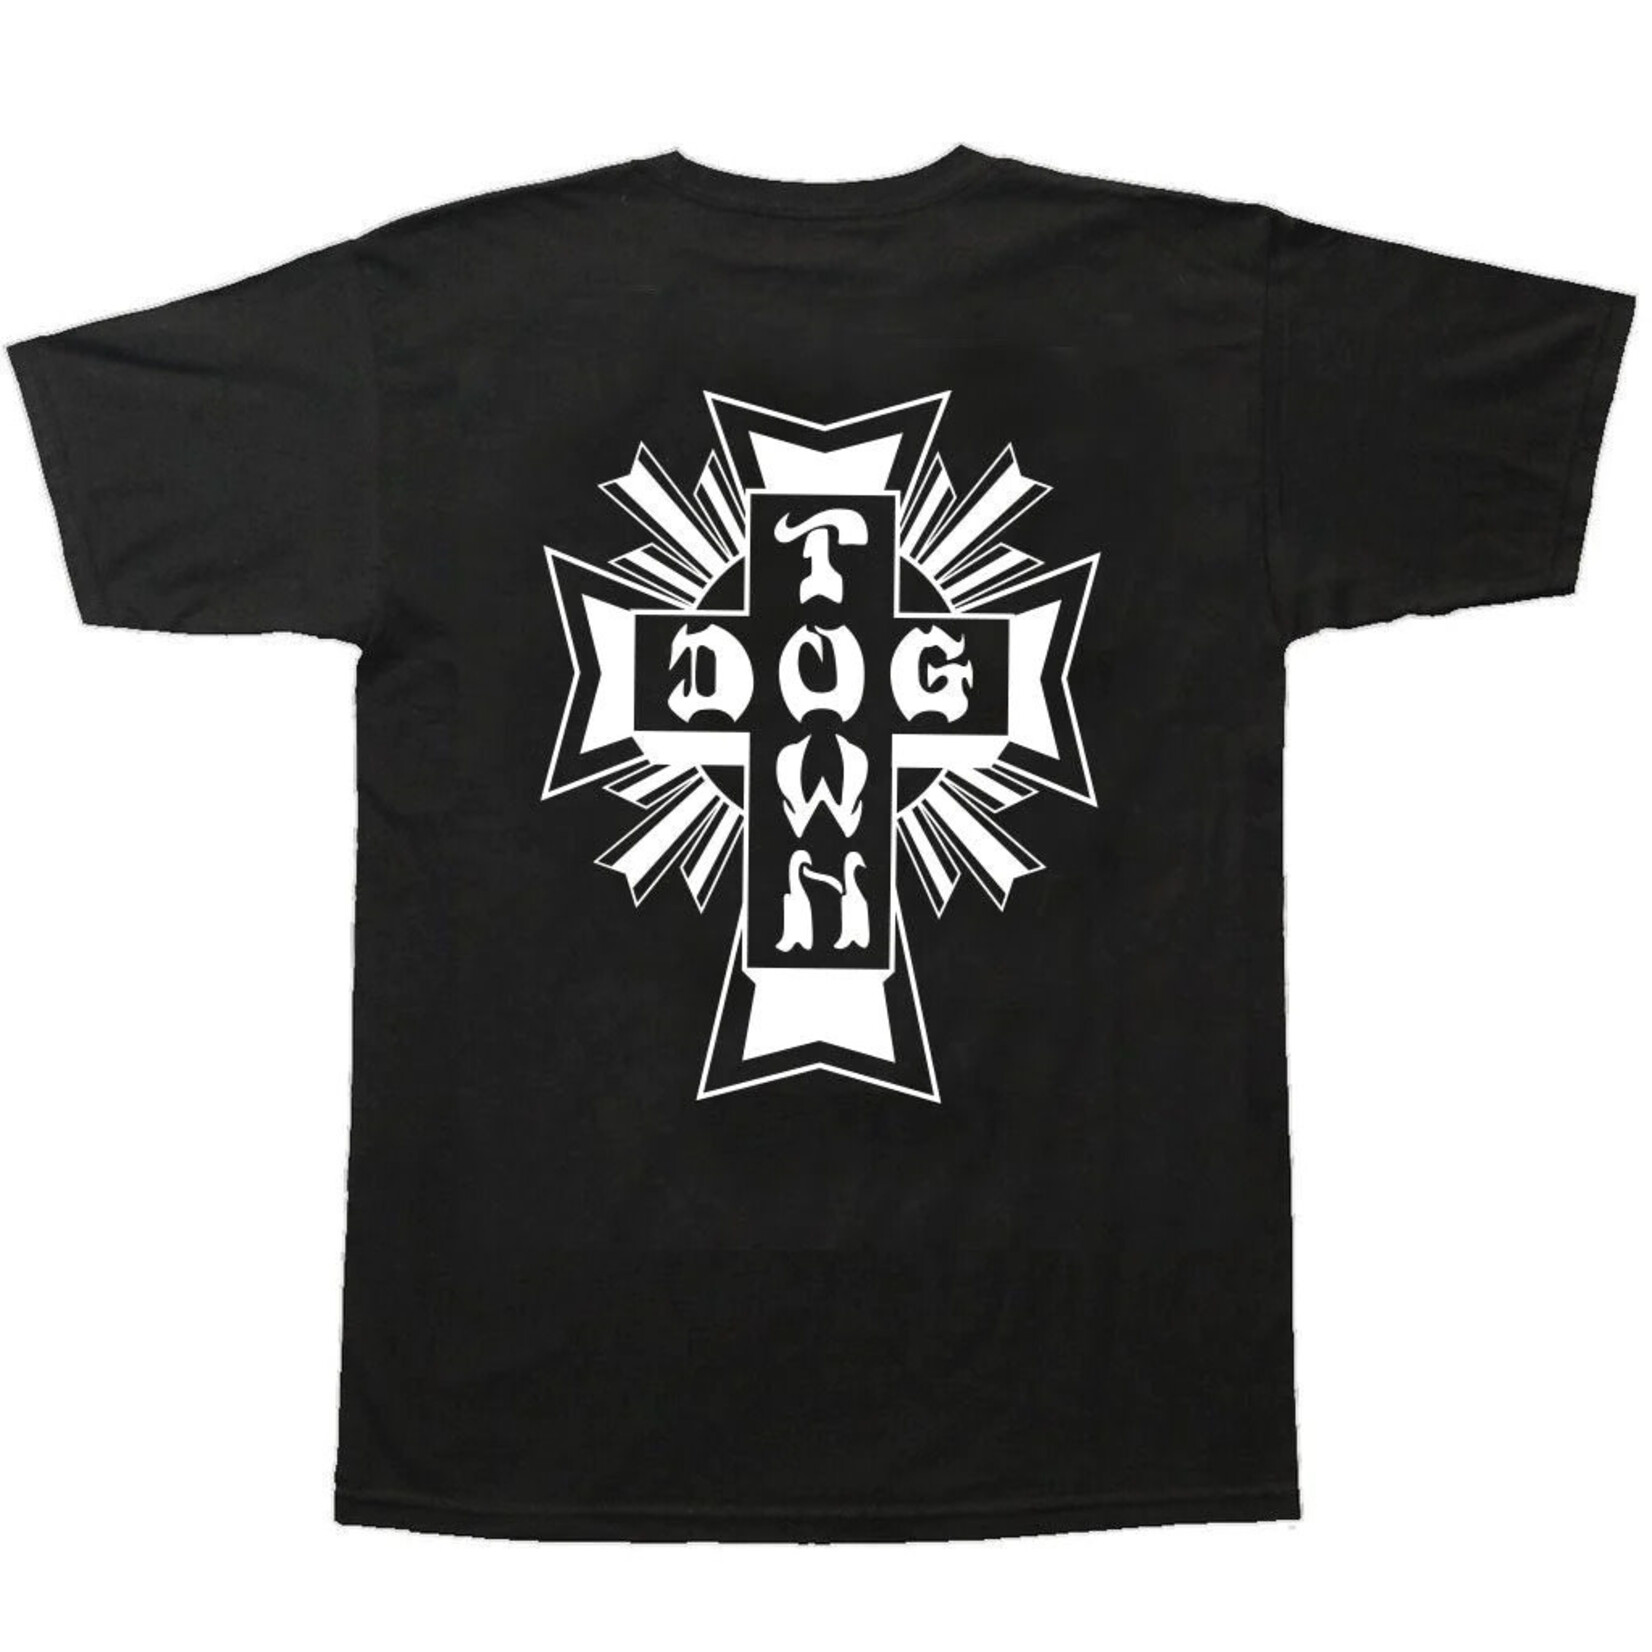 Dogtown Dogtown Cross Logo T-Shirt - Black/White